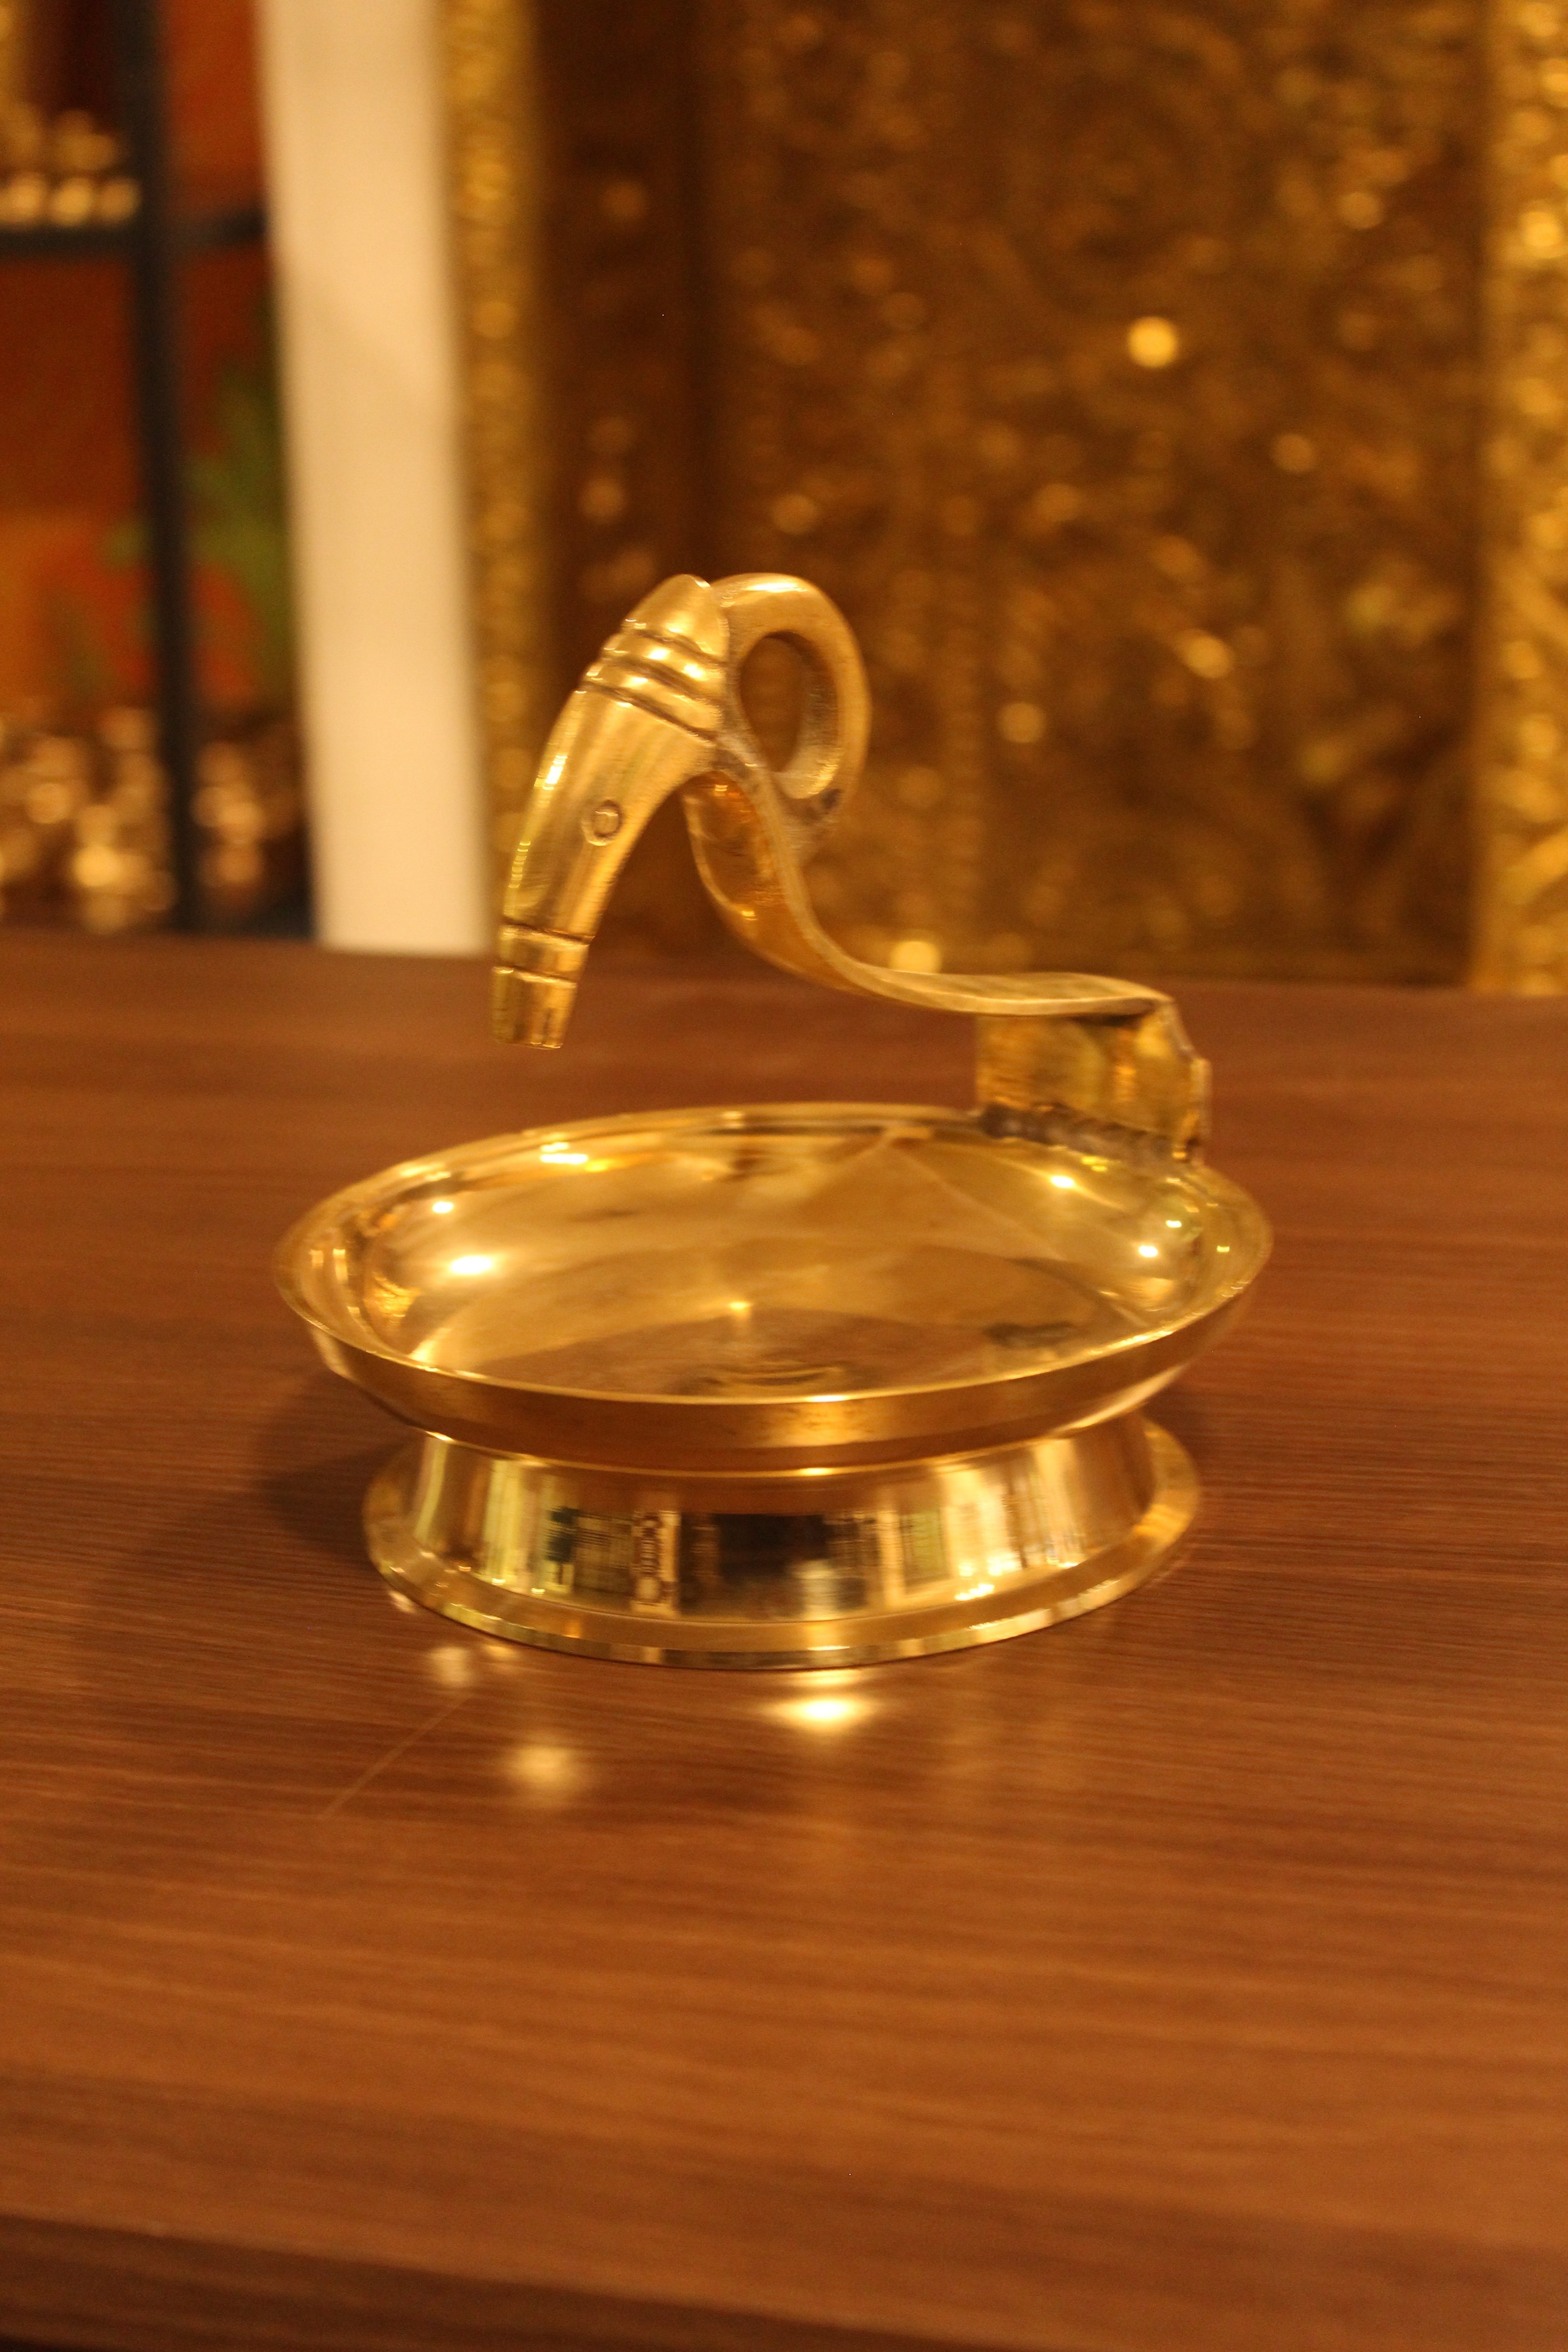 Brass Kuthira Vilakku - Premium Brass from Cherakulam Vessels & Crockery - Just Rs. 1063! Shop now at Cherakulam Vessels & Crockery